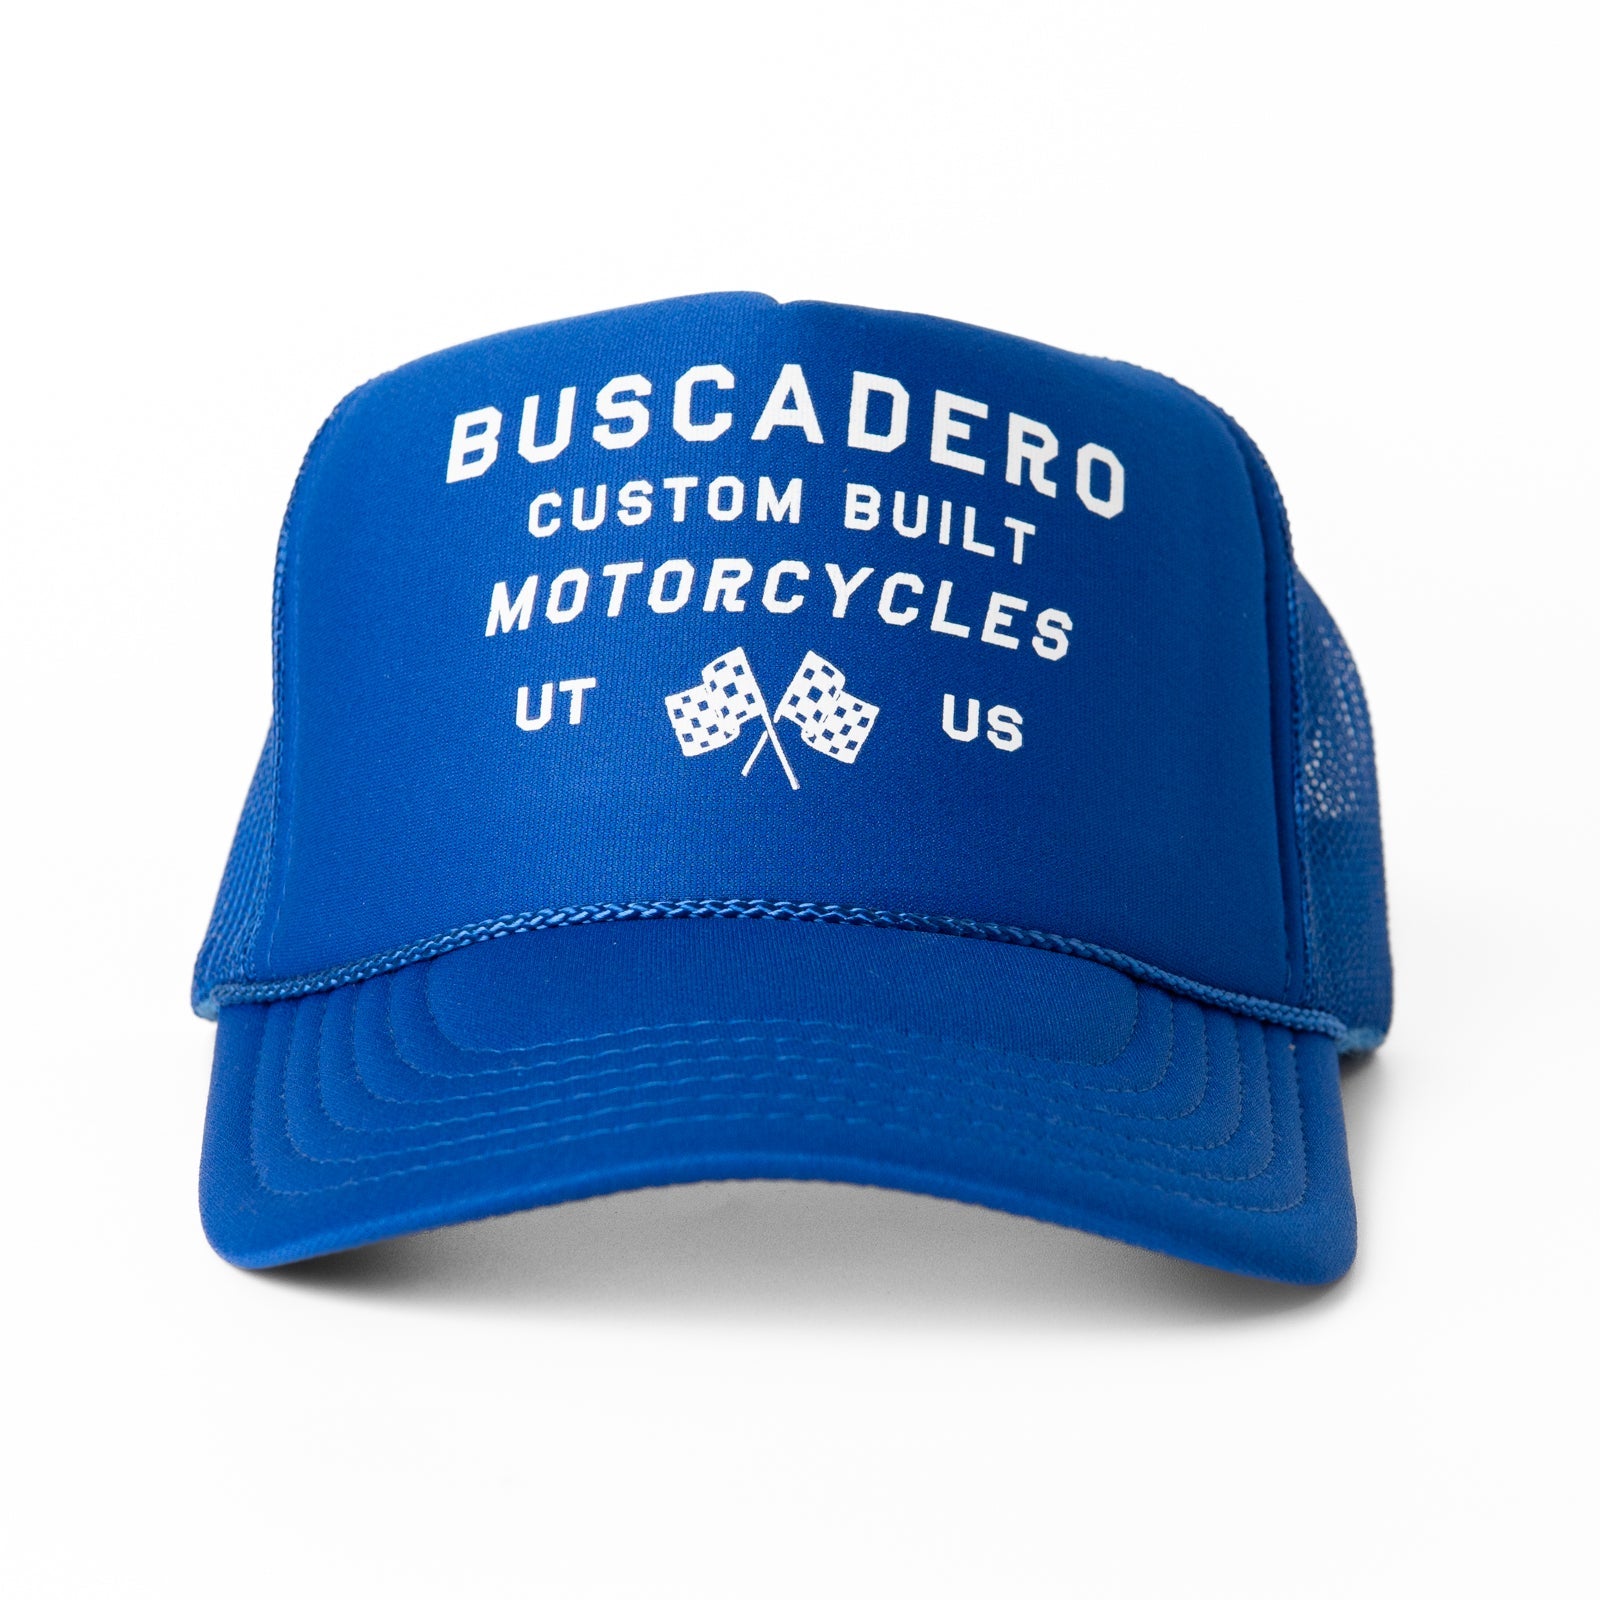 ‘Flags’ Foam Trucker Hat - Royal Blue - Buscadero Motorcycles